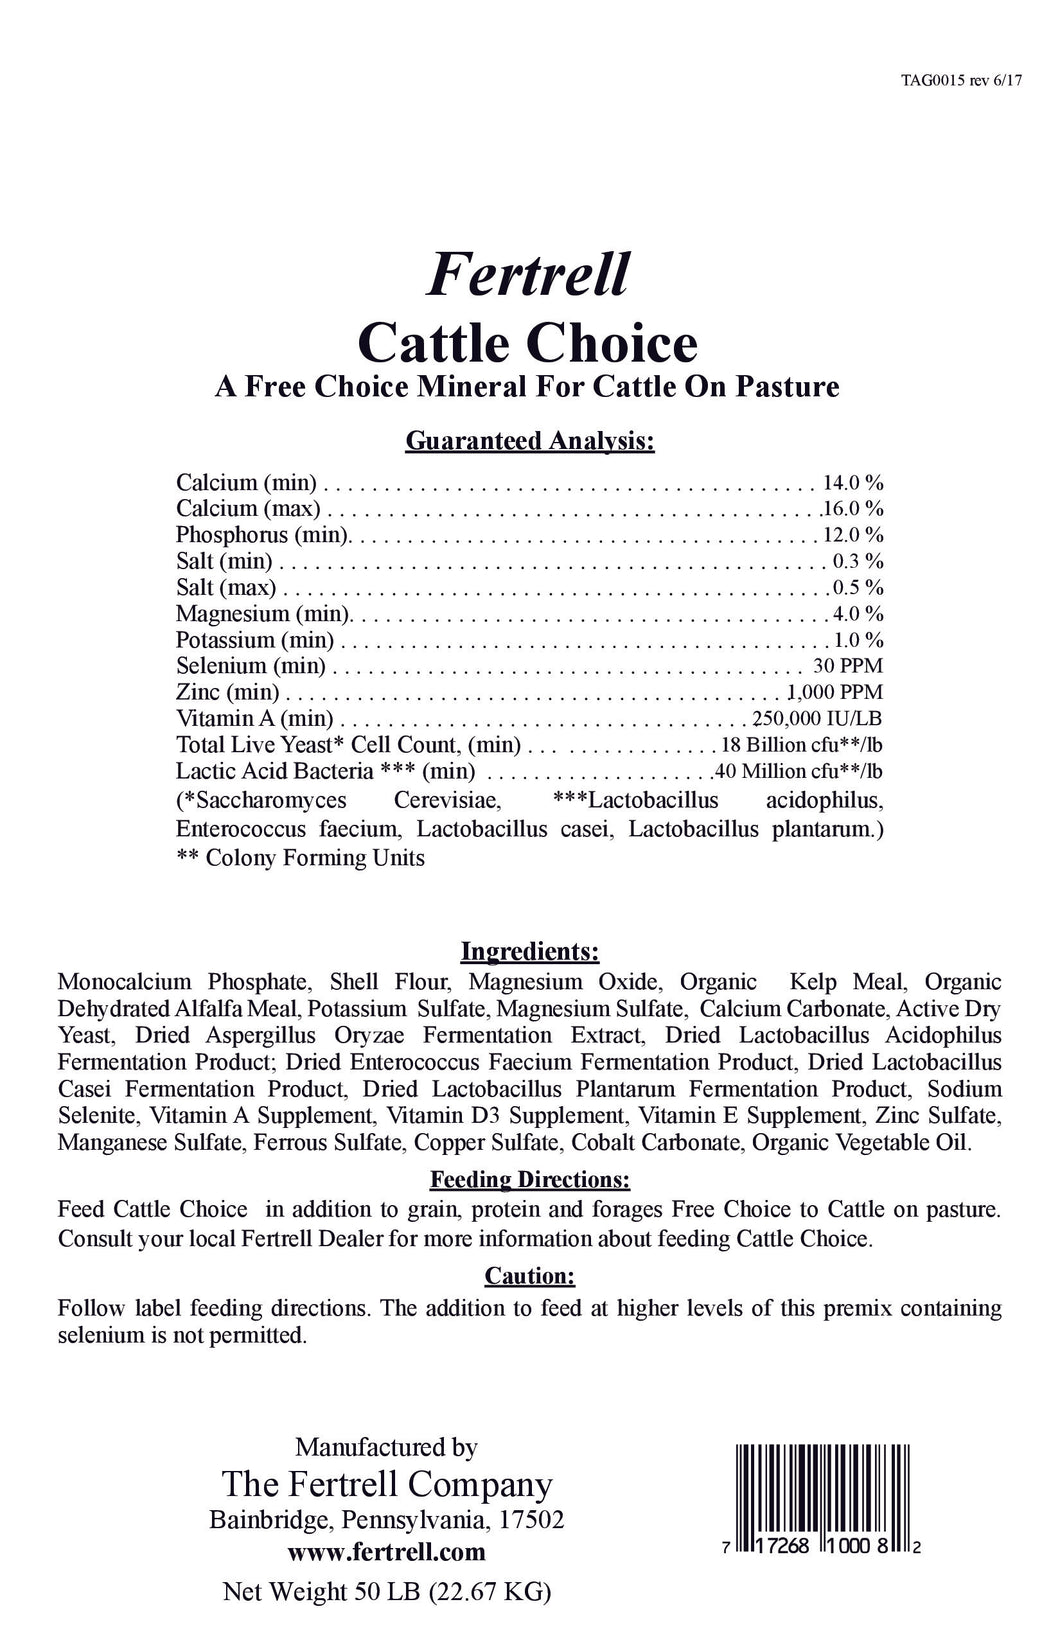 Cattle Choice